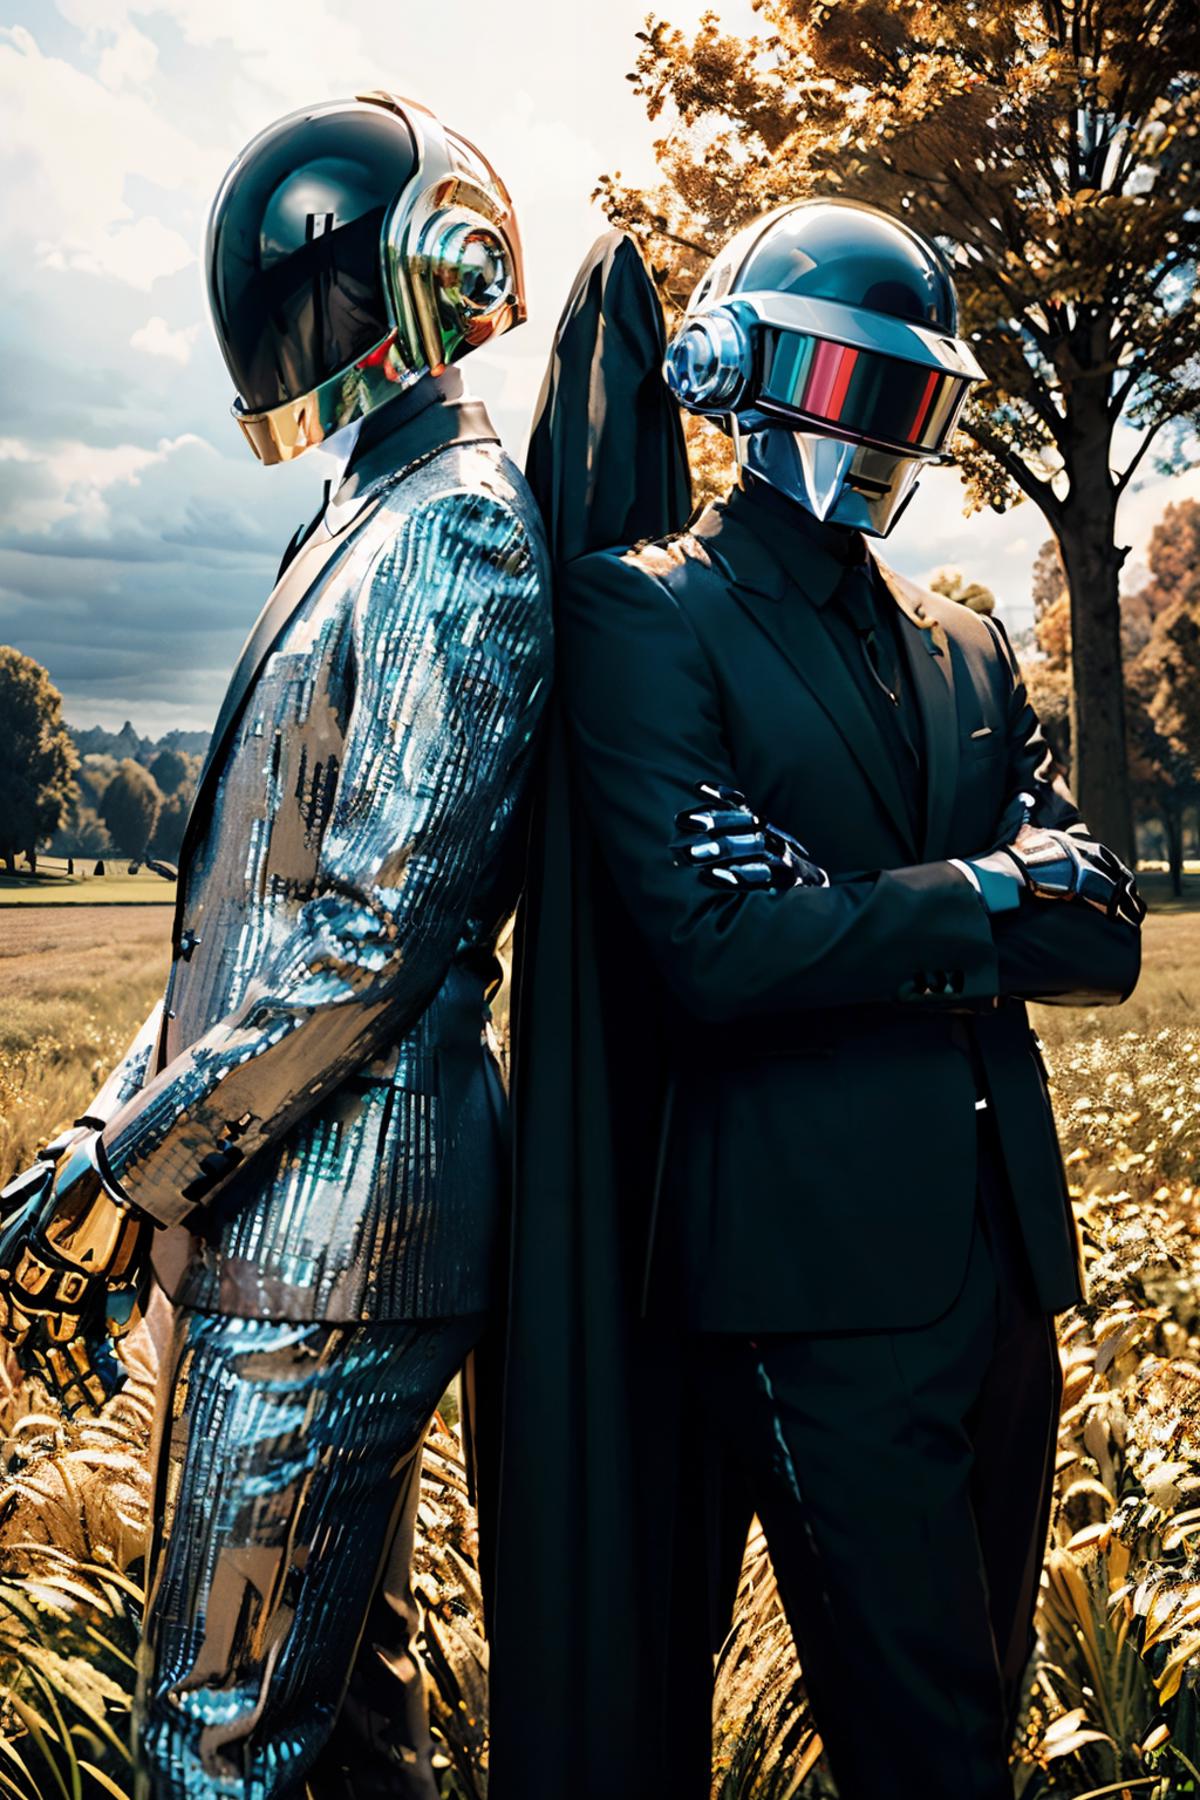 Daft Punk image by wikkitikki